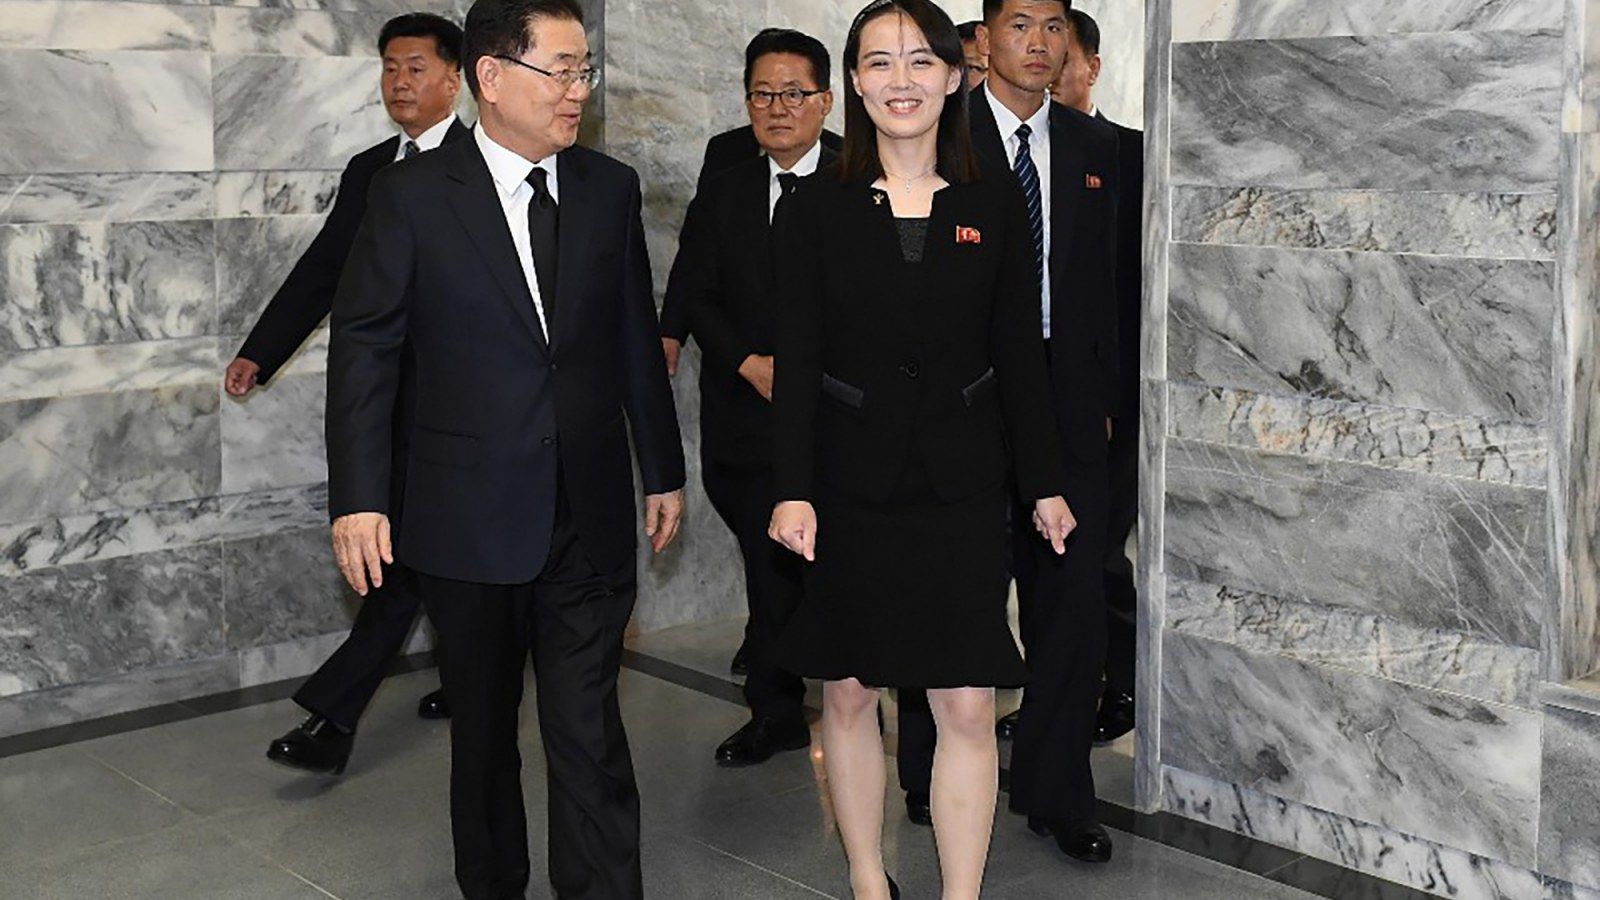 Russia Has 'No Reason' To Think Kim Jong Un's Sister to Lead North Korea